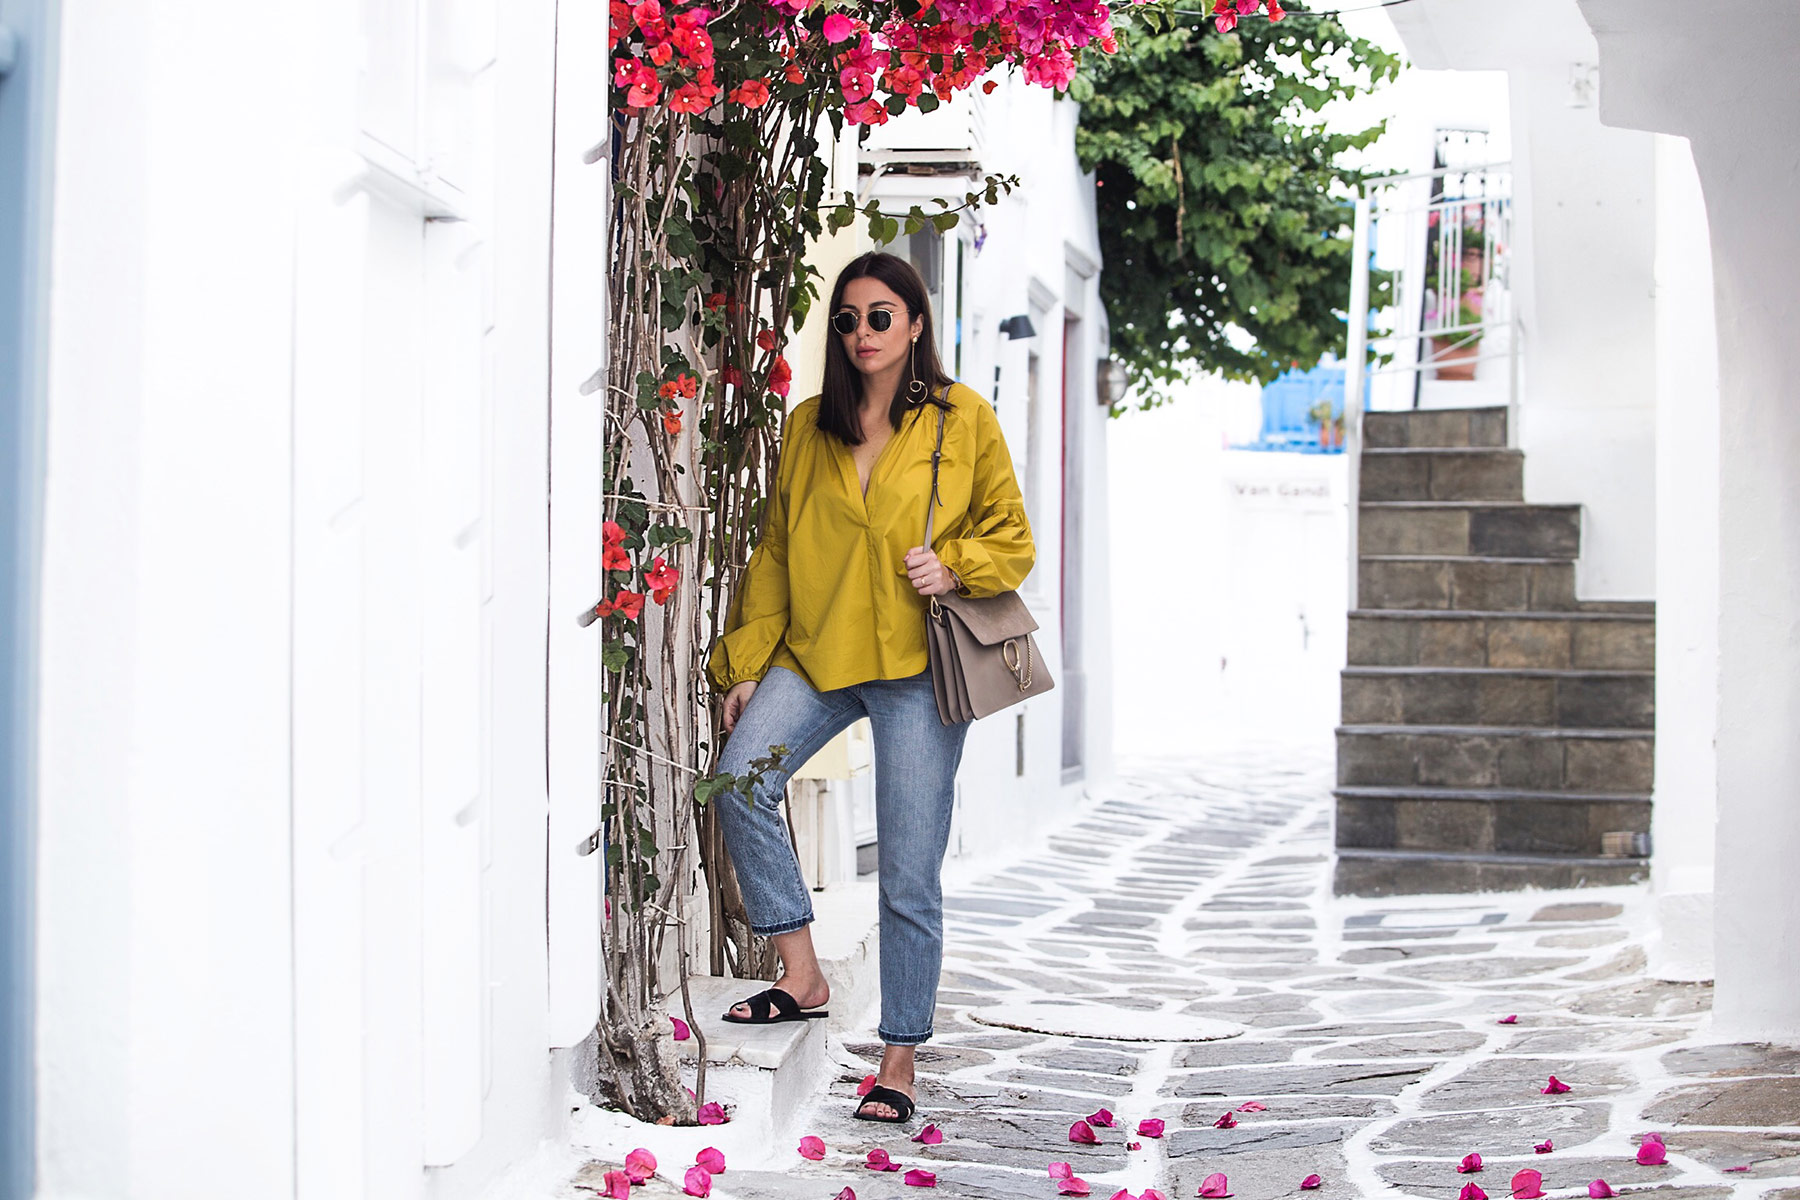 Greek islands fashion - What to wear in Greece by Stella Asteria - Fashion & Lifestyle Blogger